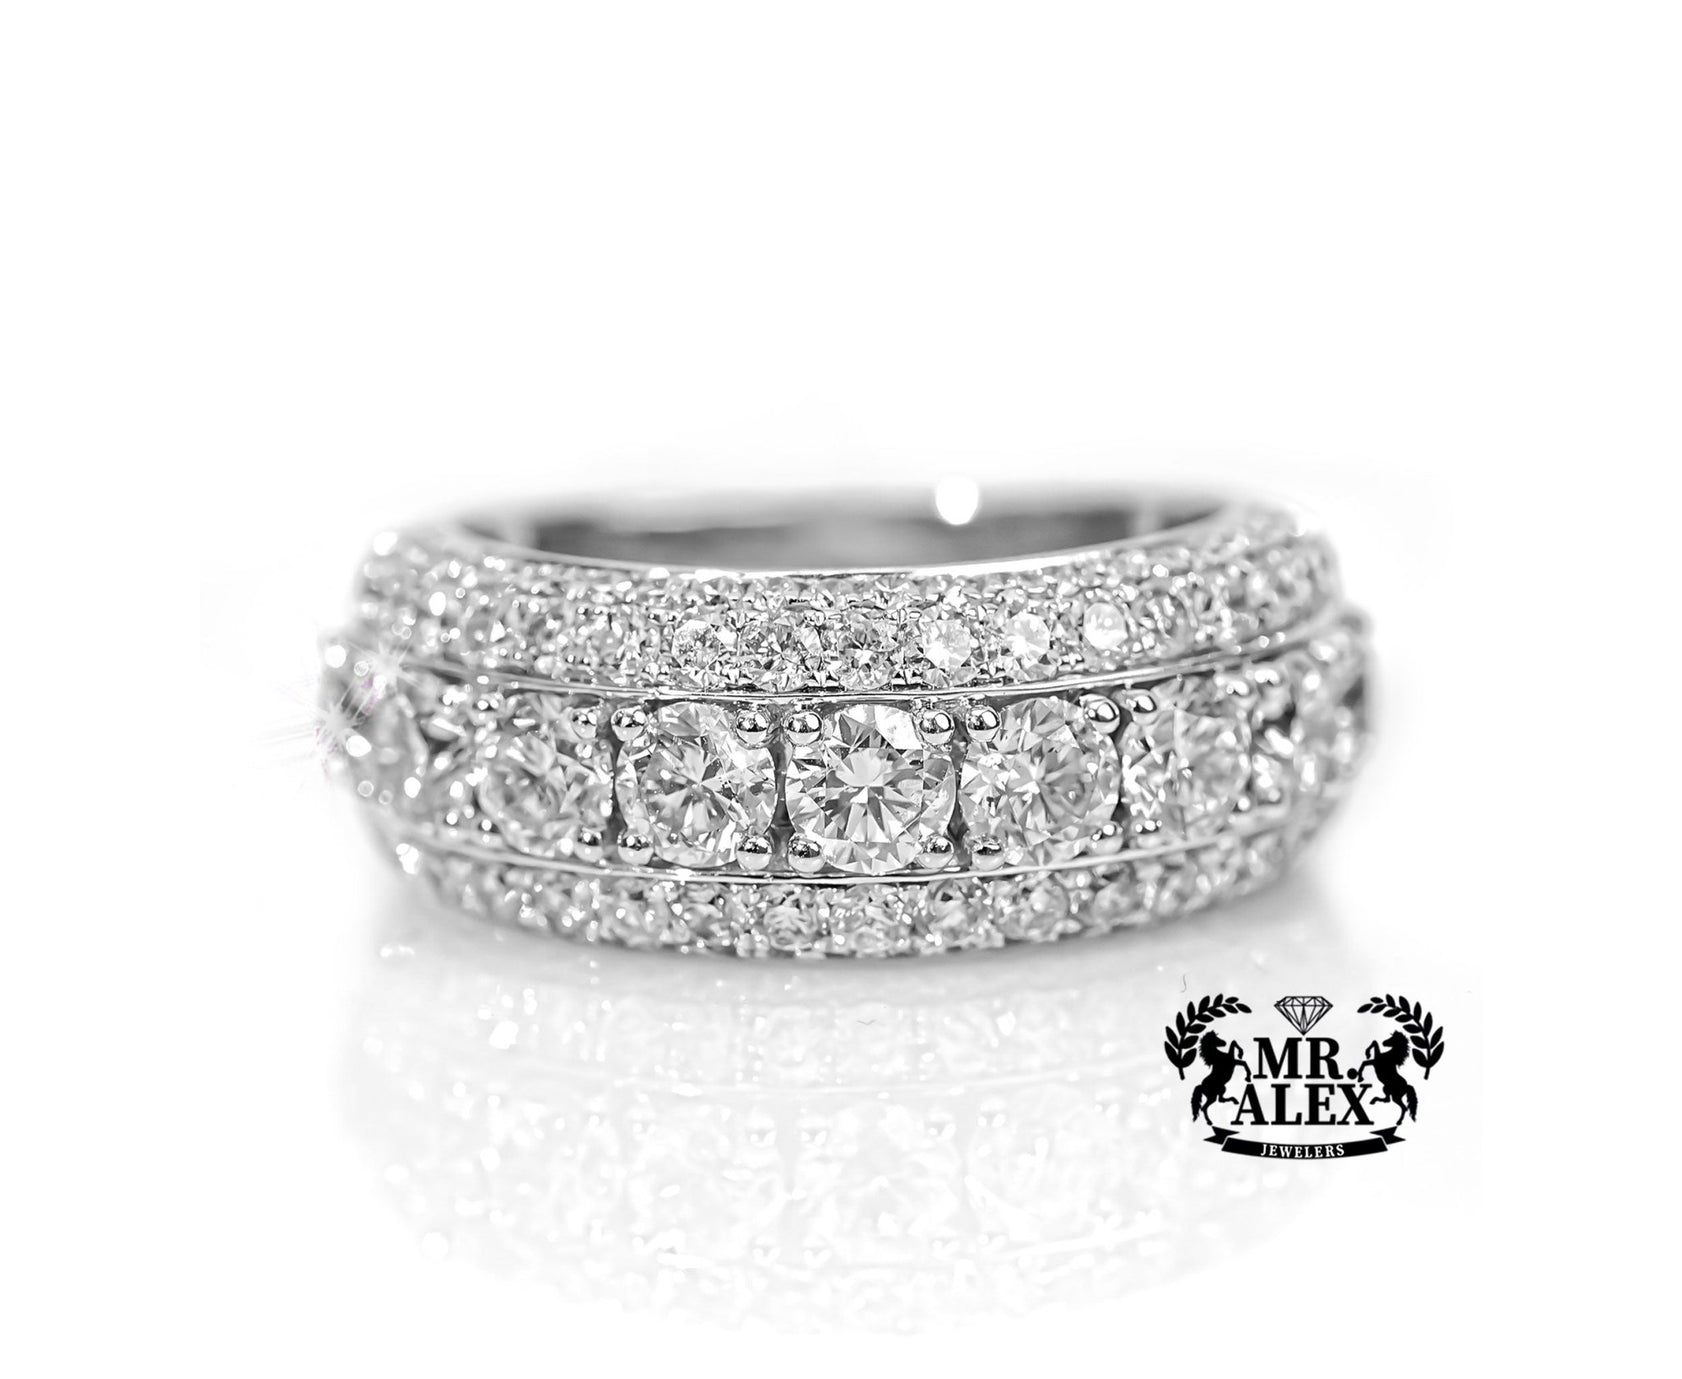 10k White Gold Three-Row Round Diamond Ring 4.40ct - Mr. Alex Jewelry